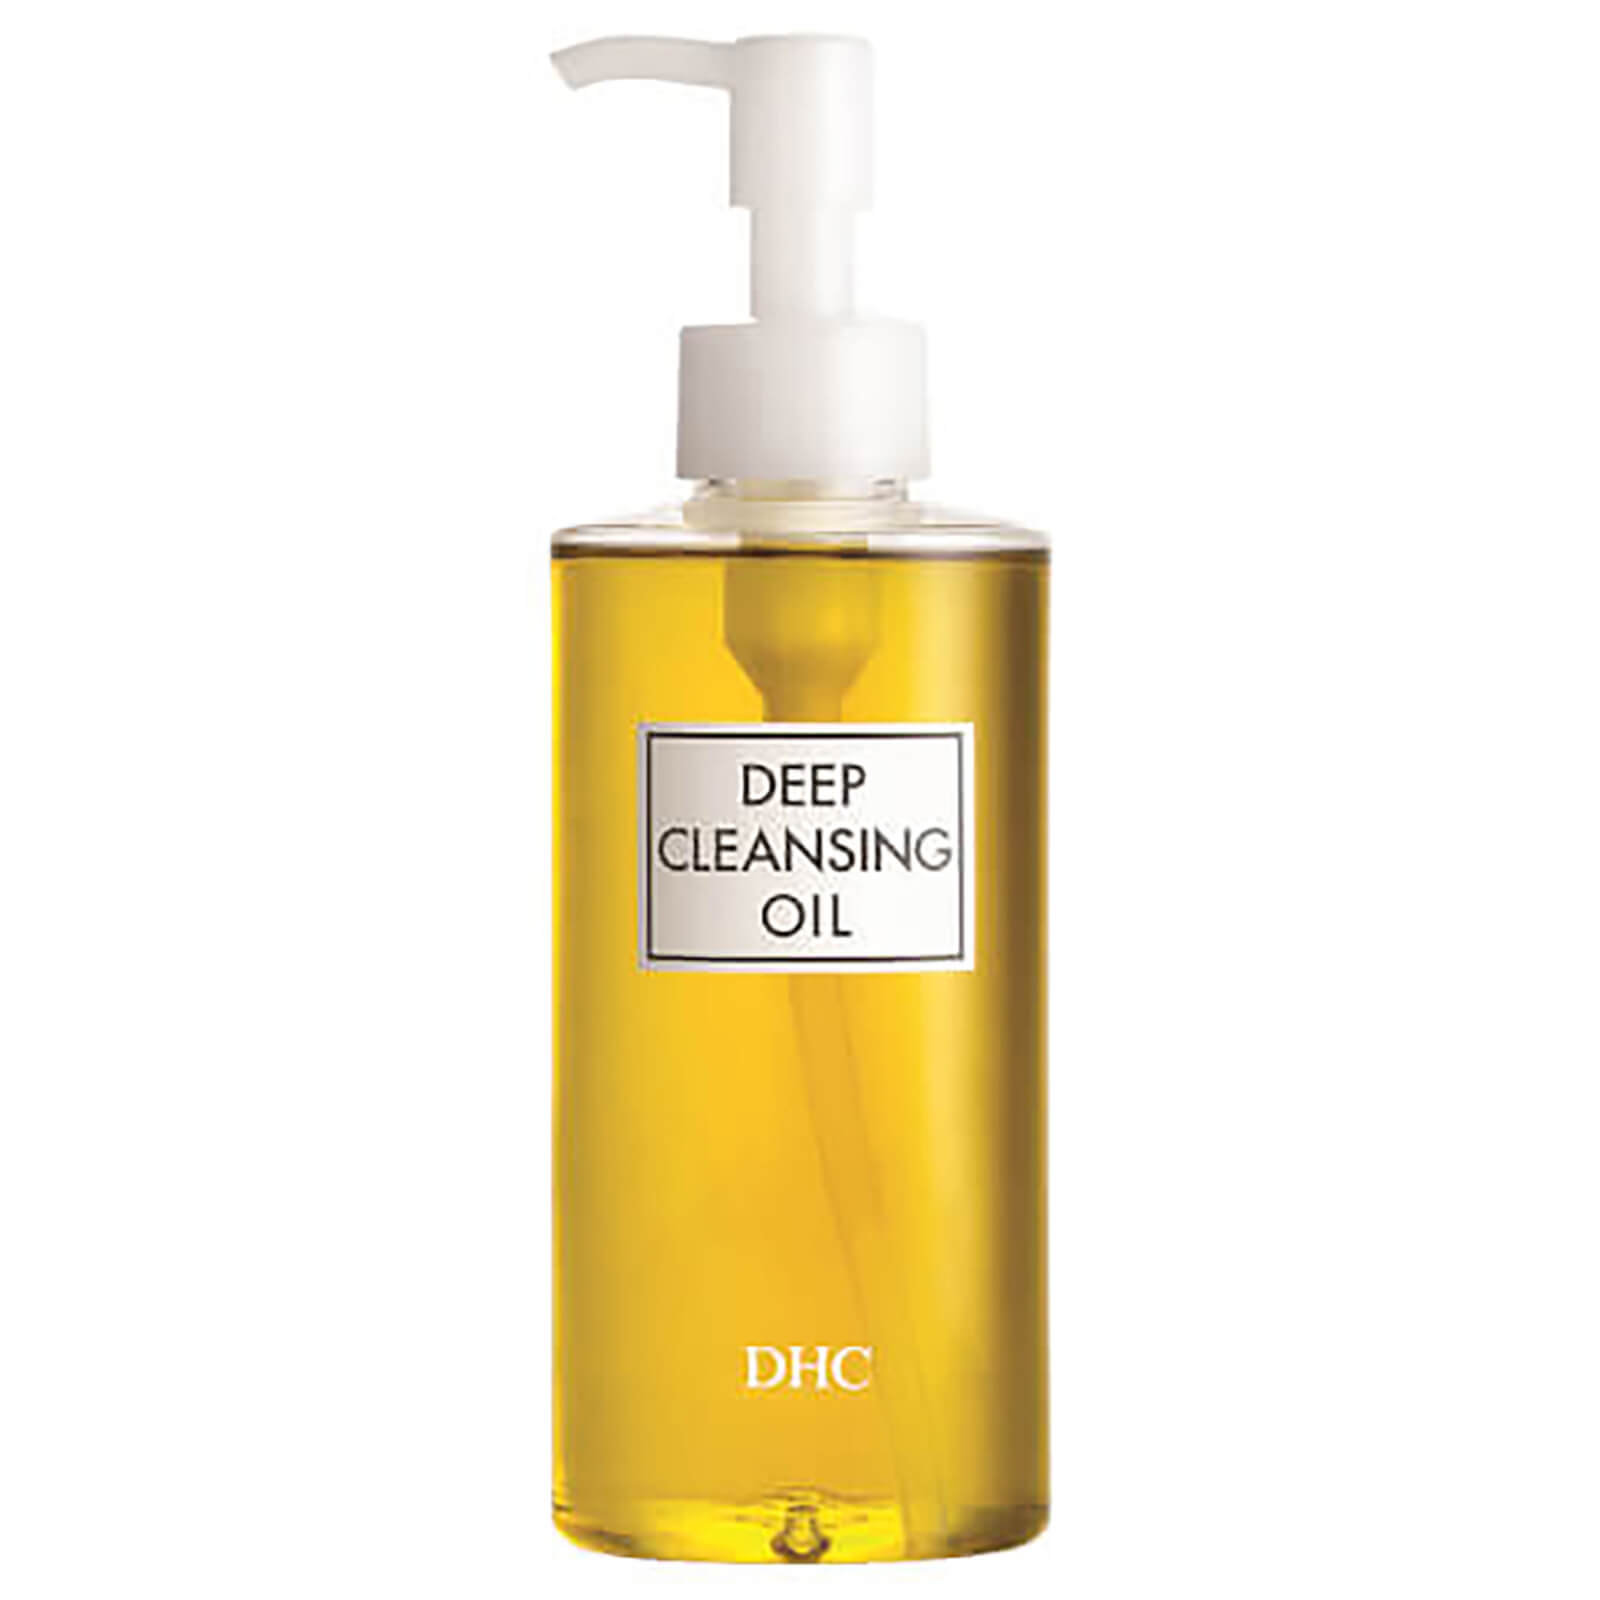 deep cleansing oil